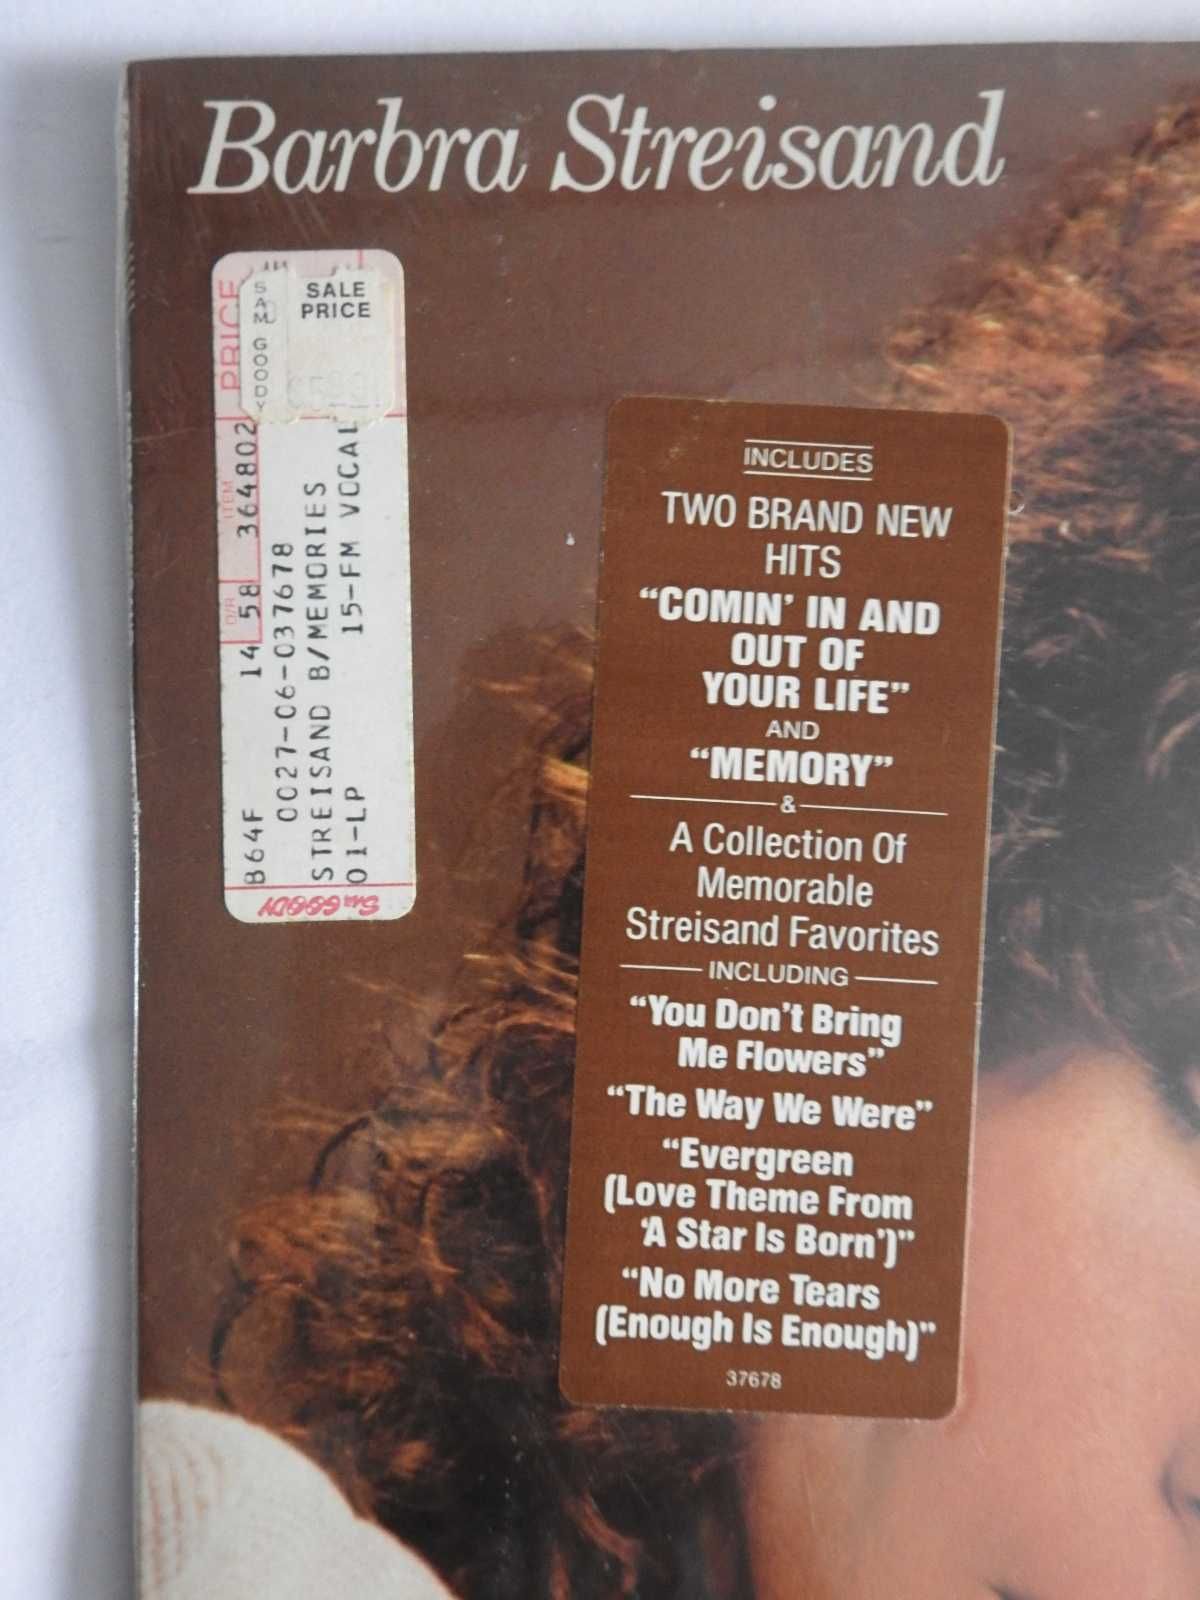 Barbra Streisand Memories LP USA 1981 пластинка оригинал EX в плёнке